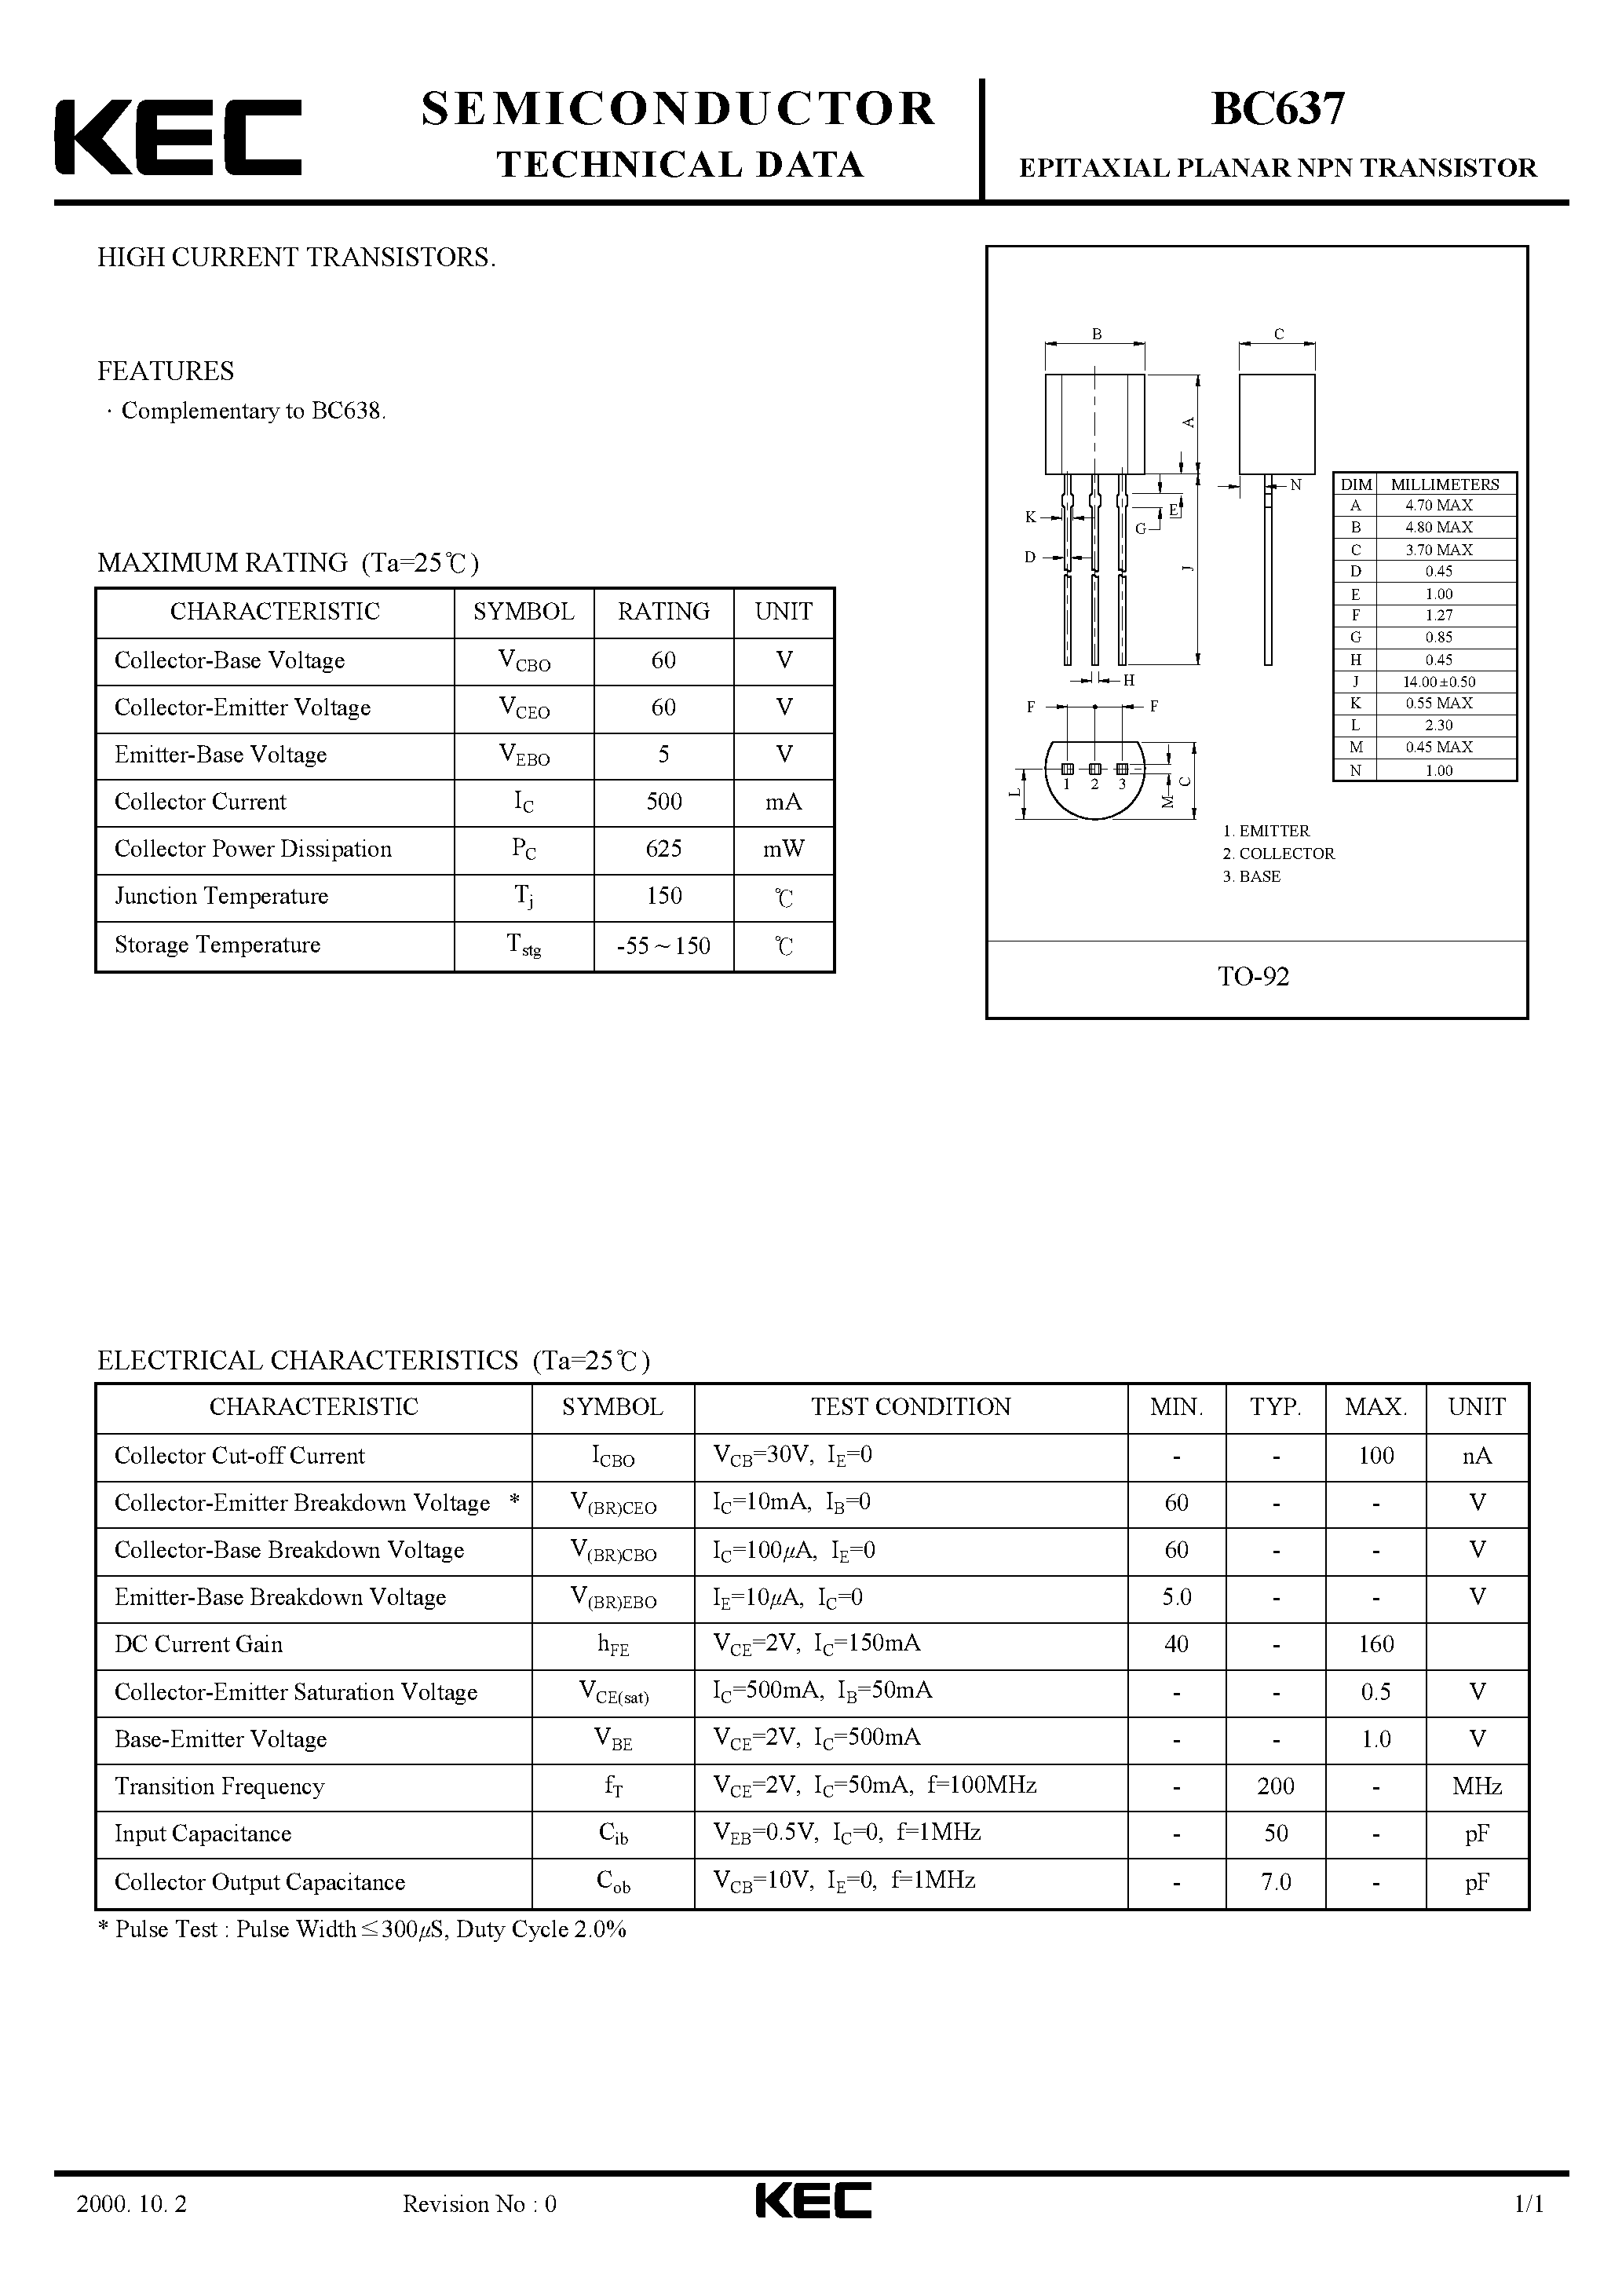 Datasheet BC637 - EPITAXIAL PLANAR NPN TRANSISTOR(HIGH CURRENT TRANSISTORS) page 1